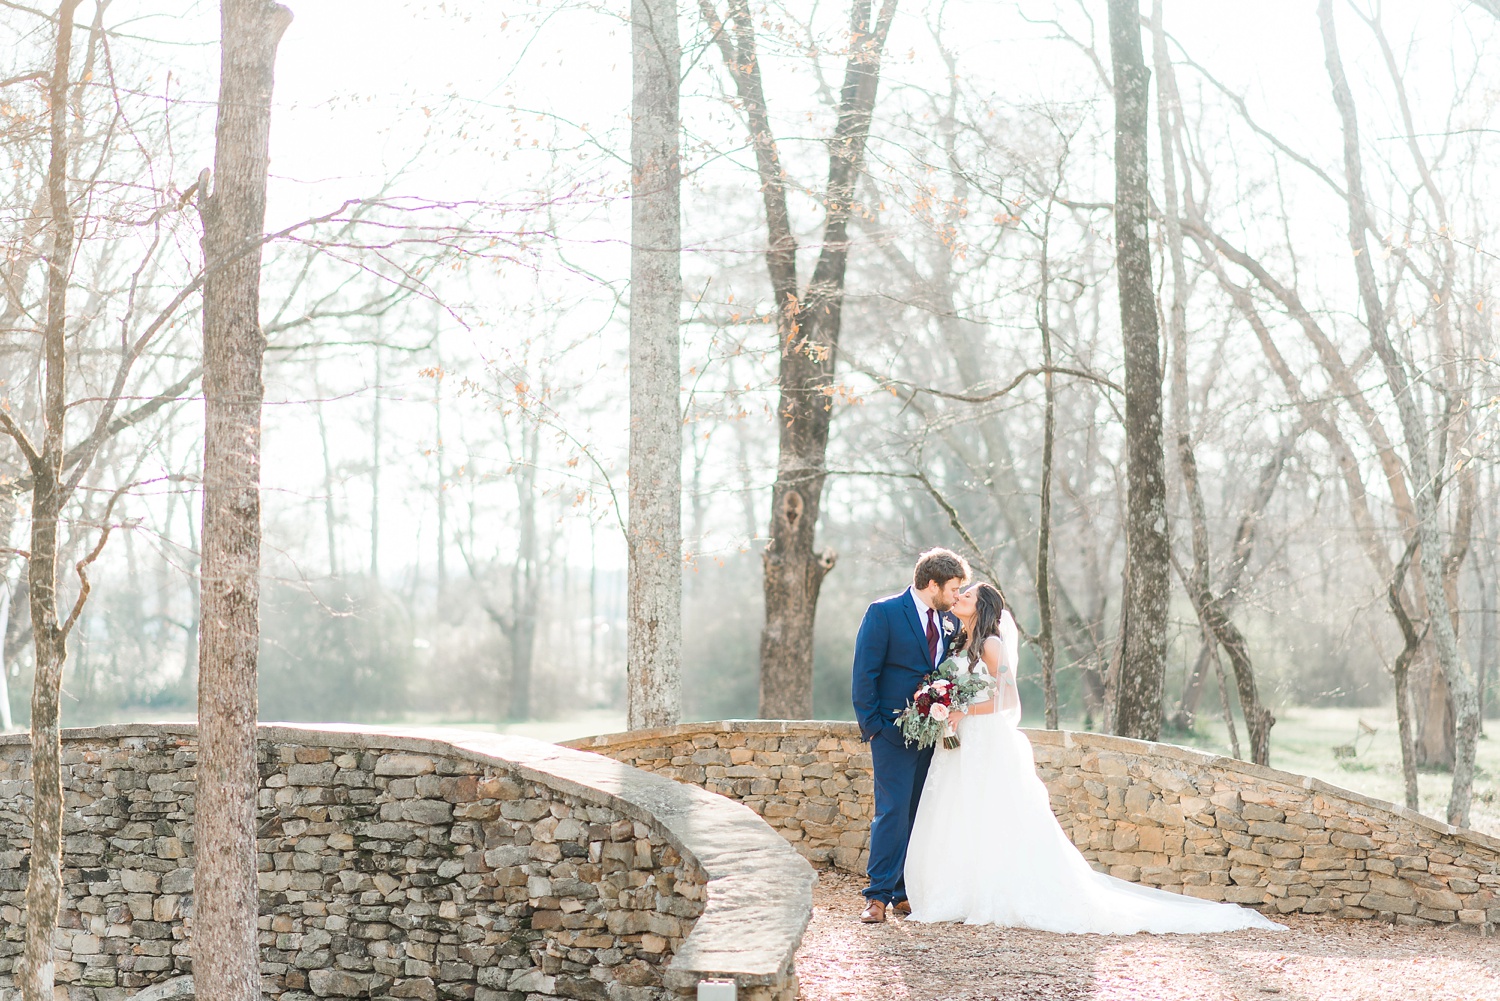 Mathews Manor Winter Wedding | Birmingham Alabama Wedding Photographer_0020.jpg